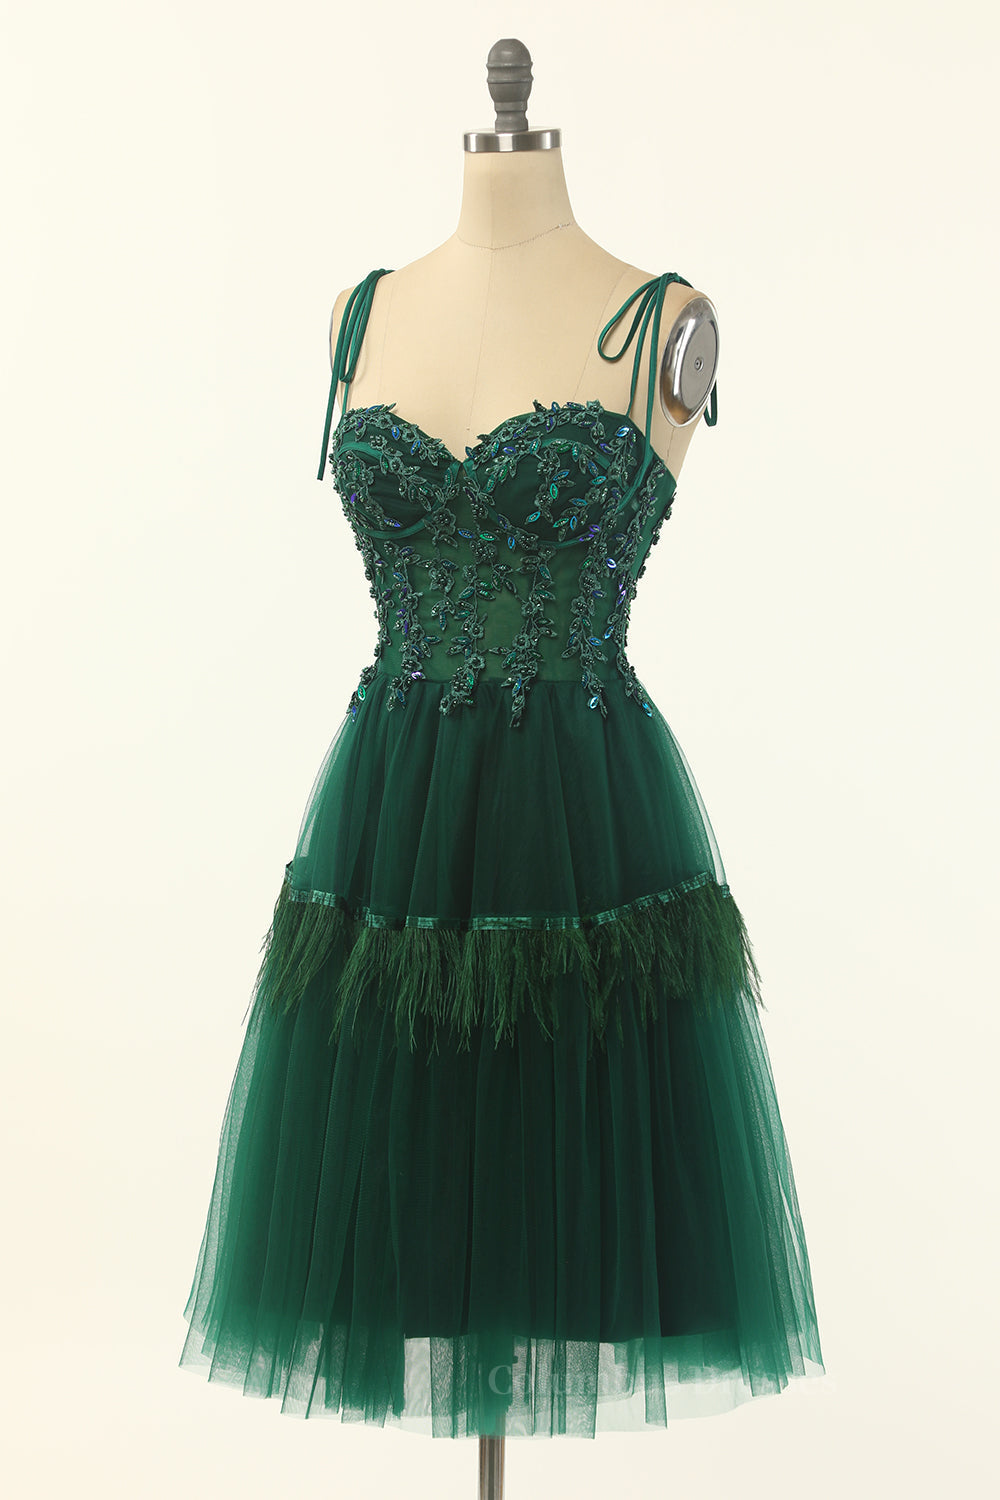 Bridesmaid Dresses Shop, Dark Green A-line Short Tulle Party Dress